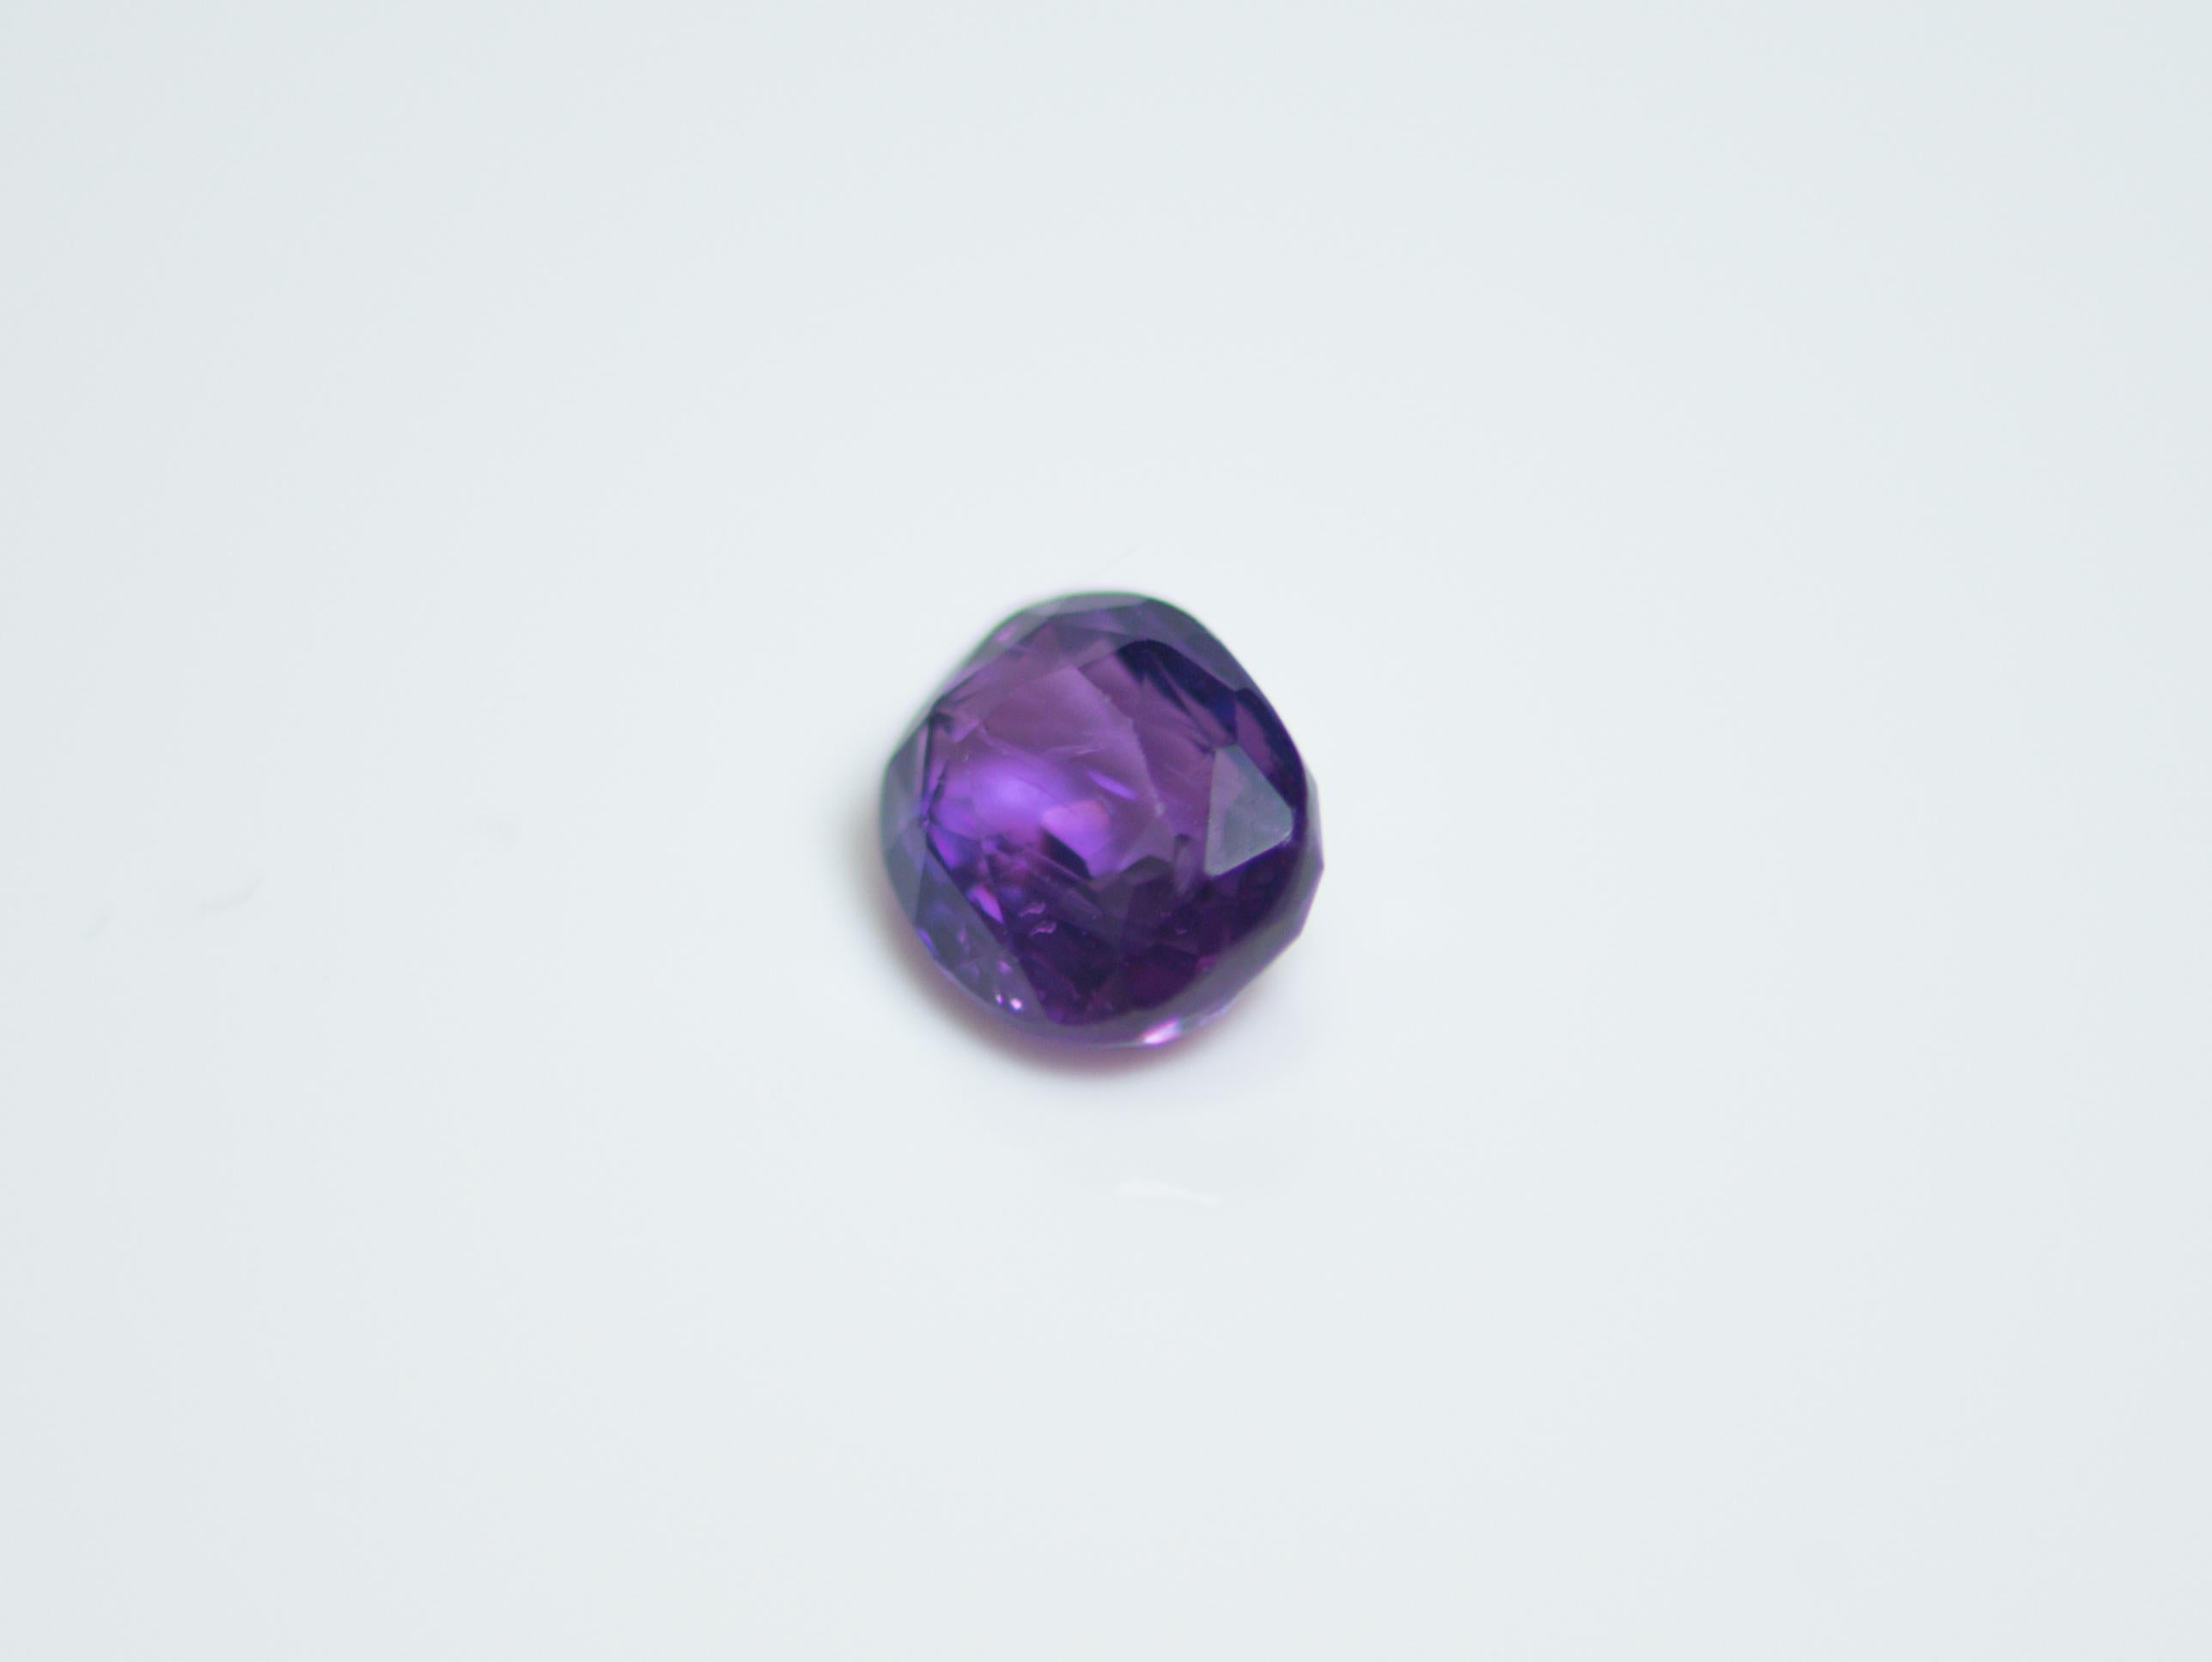 Oval Cut IGI Certified Natural Purple Sapphire of 1.13 Carat For Sale